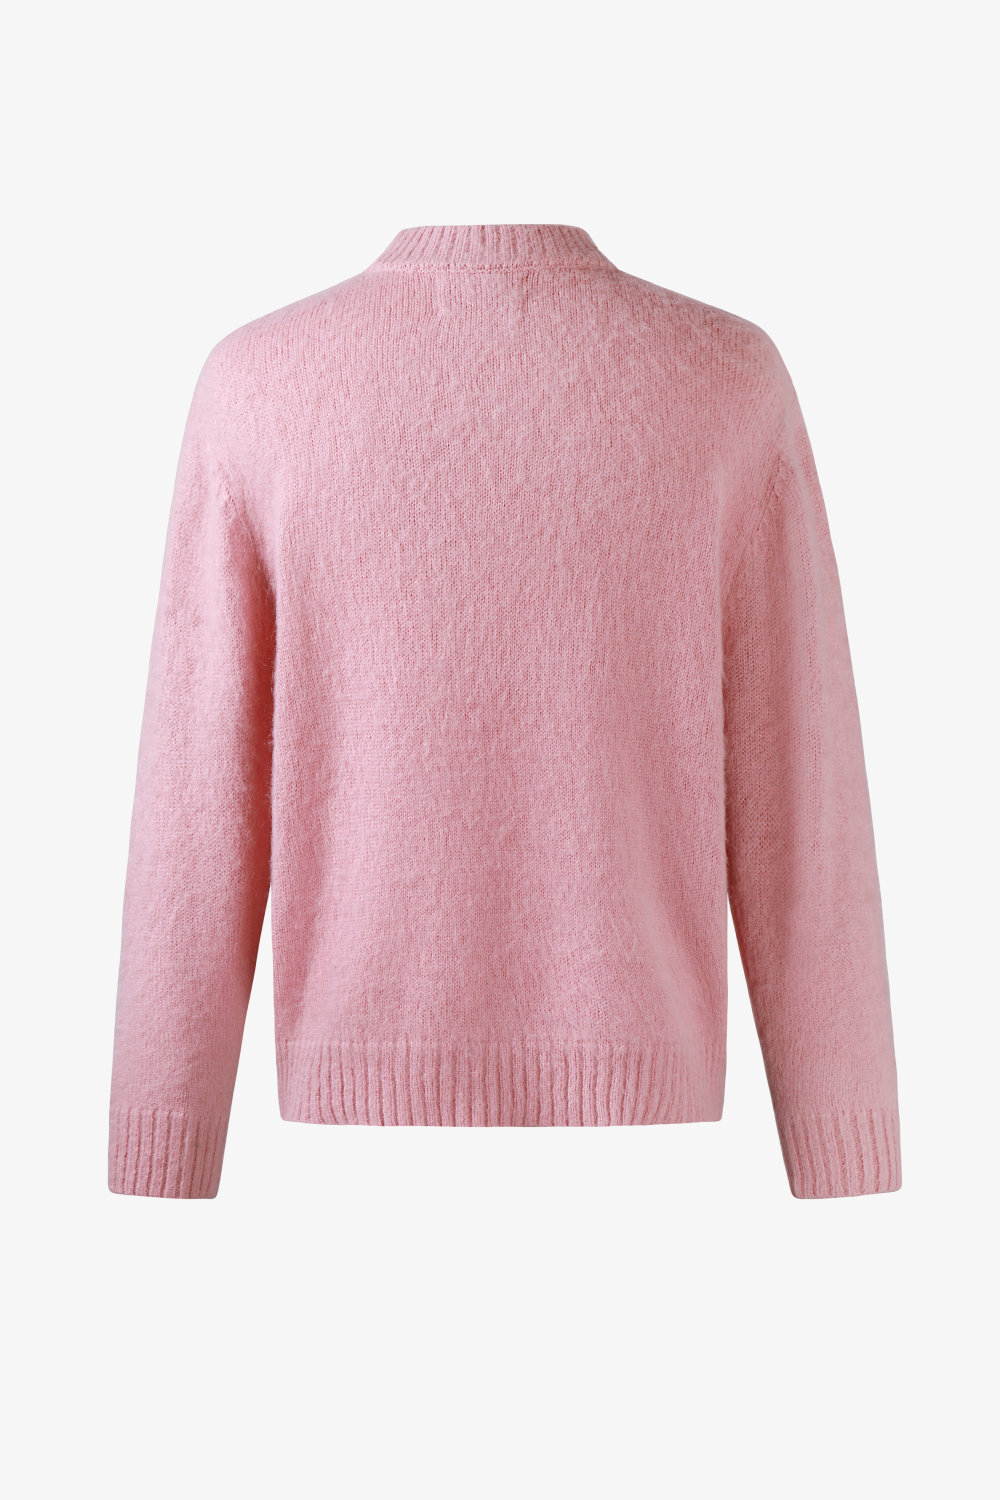 Blush Mohair Sweater